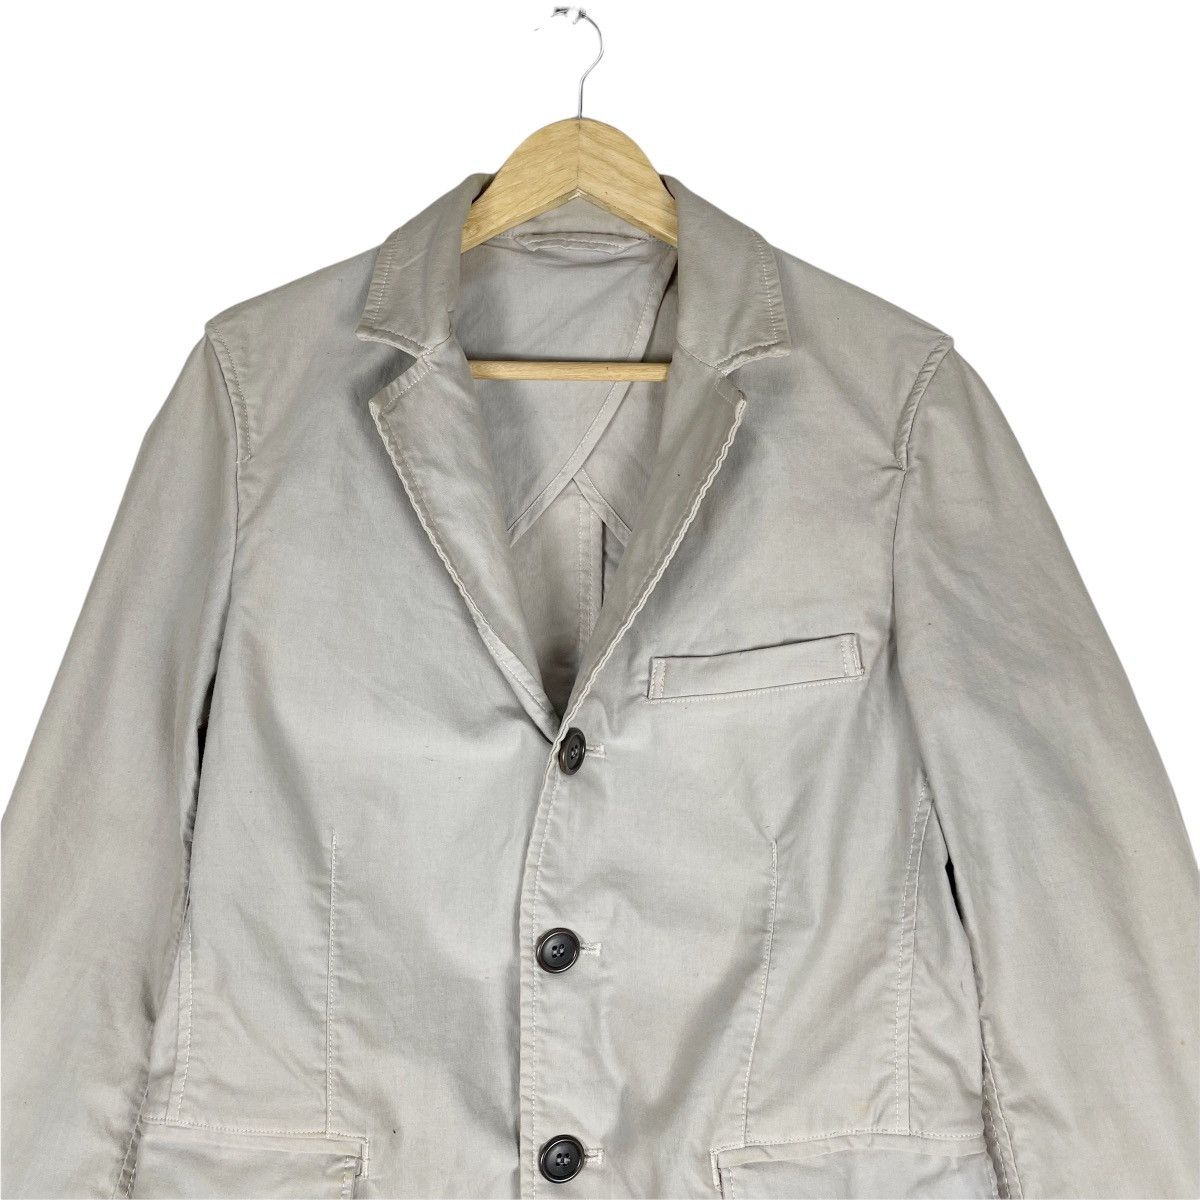 🔥HR Market Japan Workwear Jacket - 4